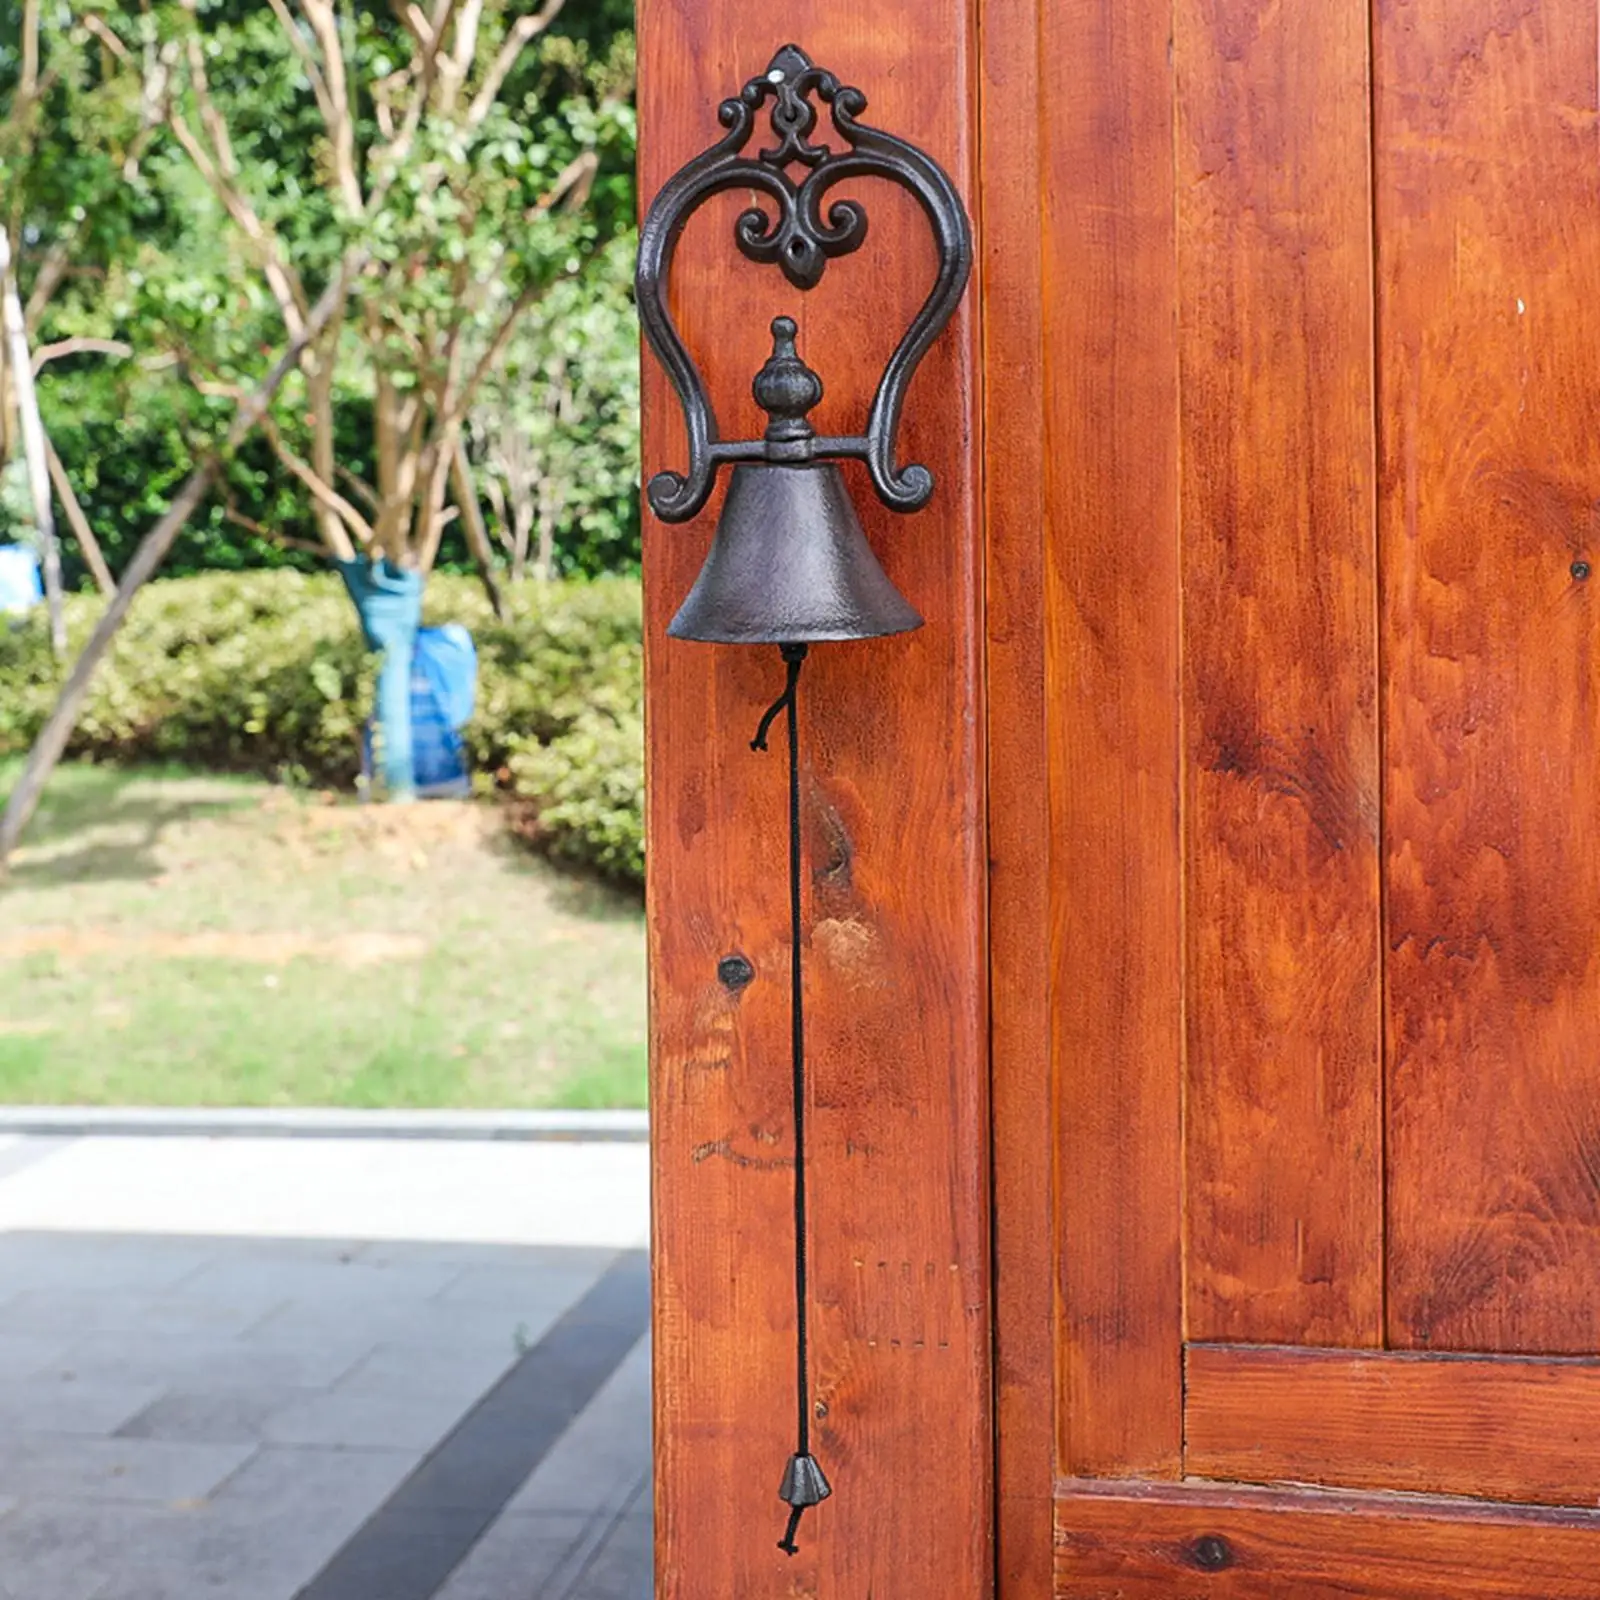 Dinner Bell Door Bell Decorative Bell Wall Mounted Dinner Bell Manually Shaking Cast Iron Doorbells for Yard Garden Wall Decor